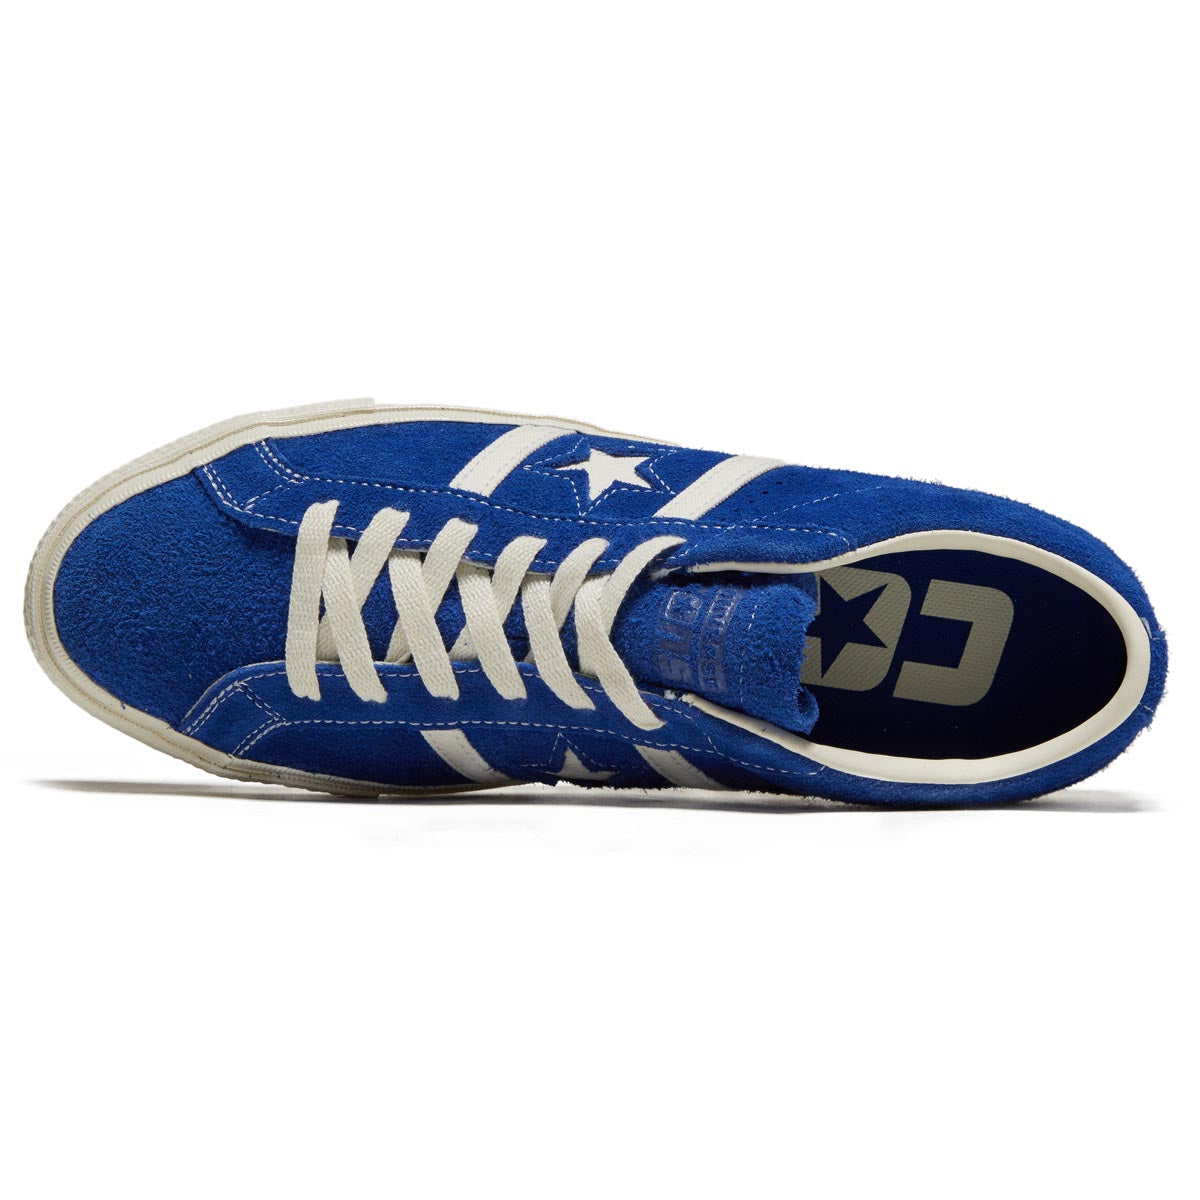 Converse One Star Academy Pro Shoes - Blue/Egret/Egret image 3